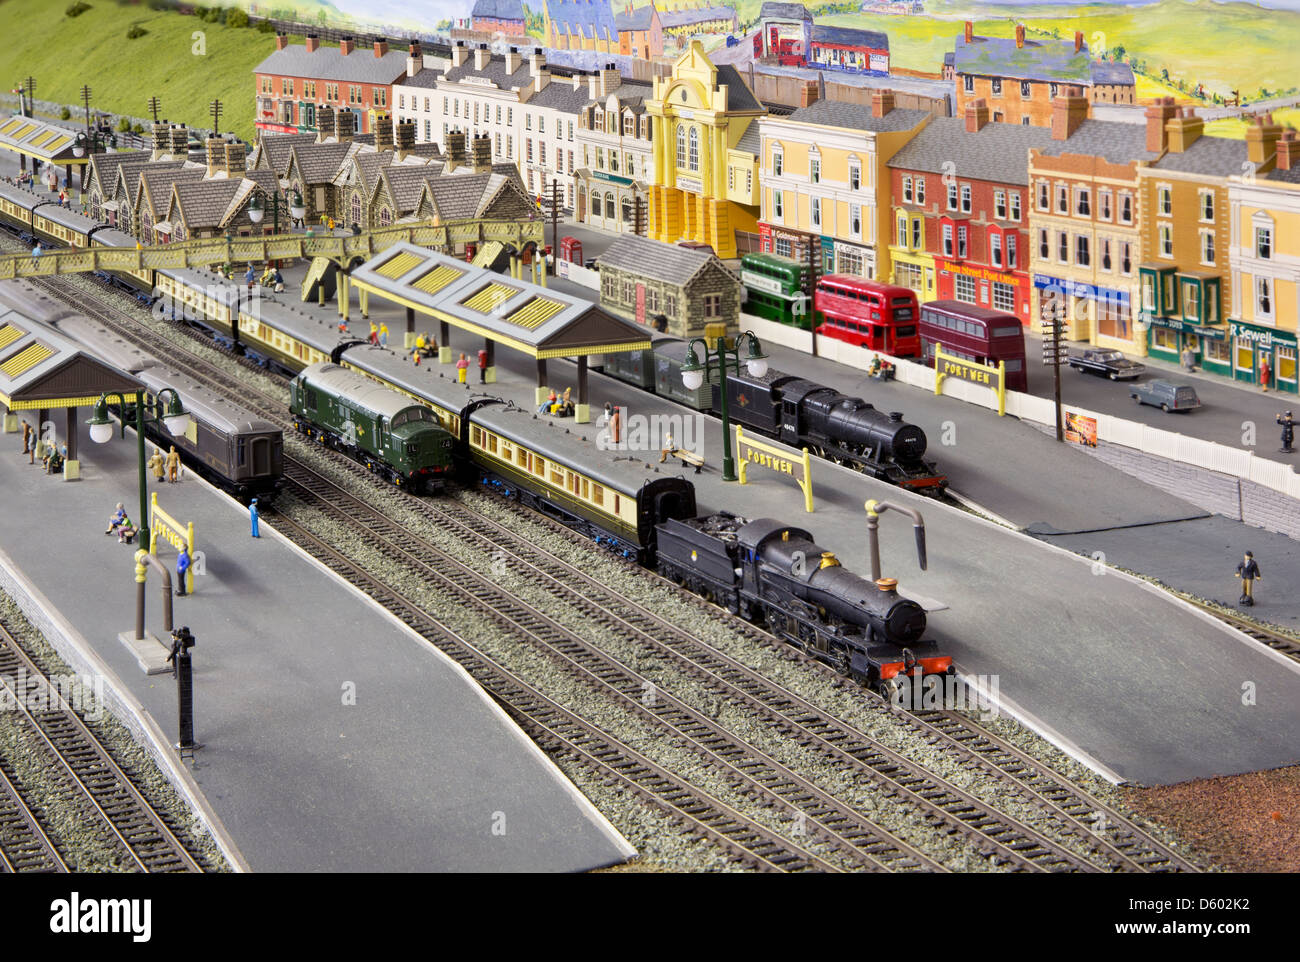 'N' gauge model railway scene Stock Photo